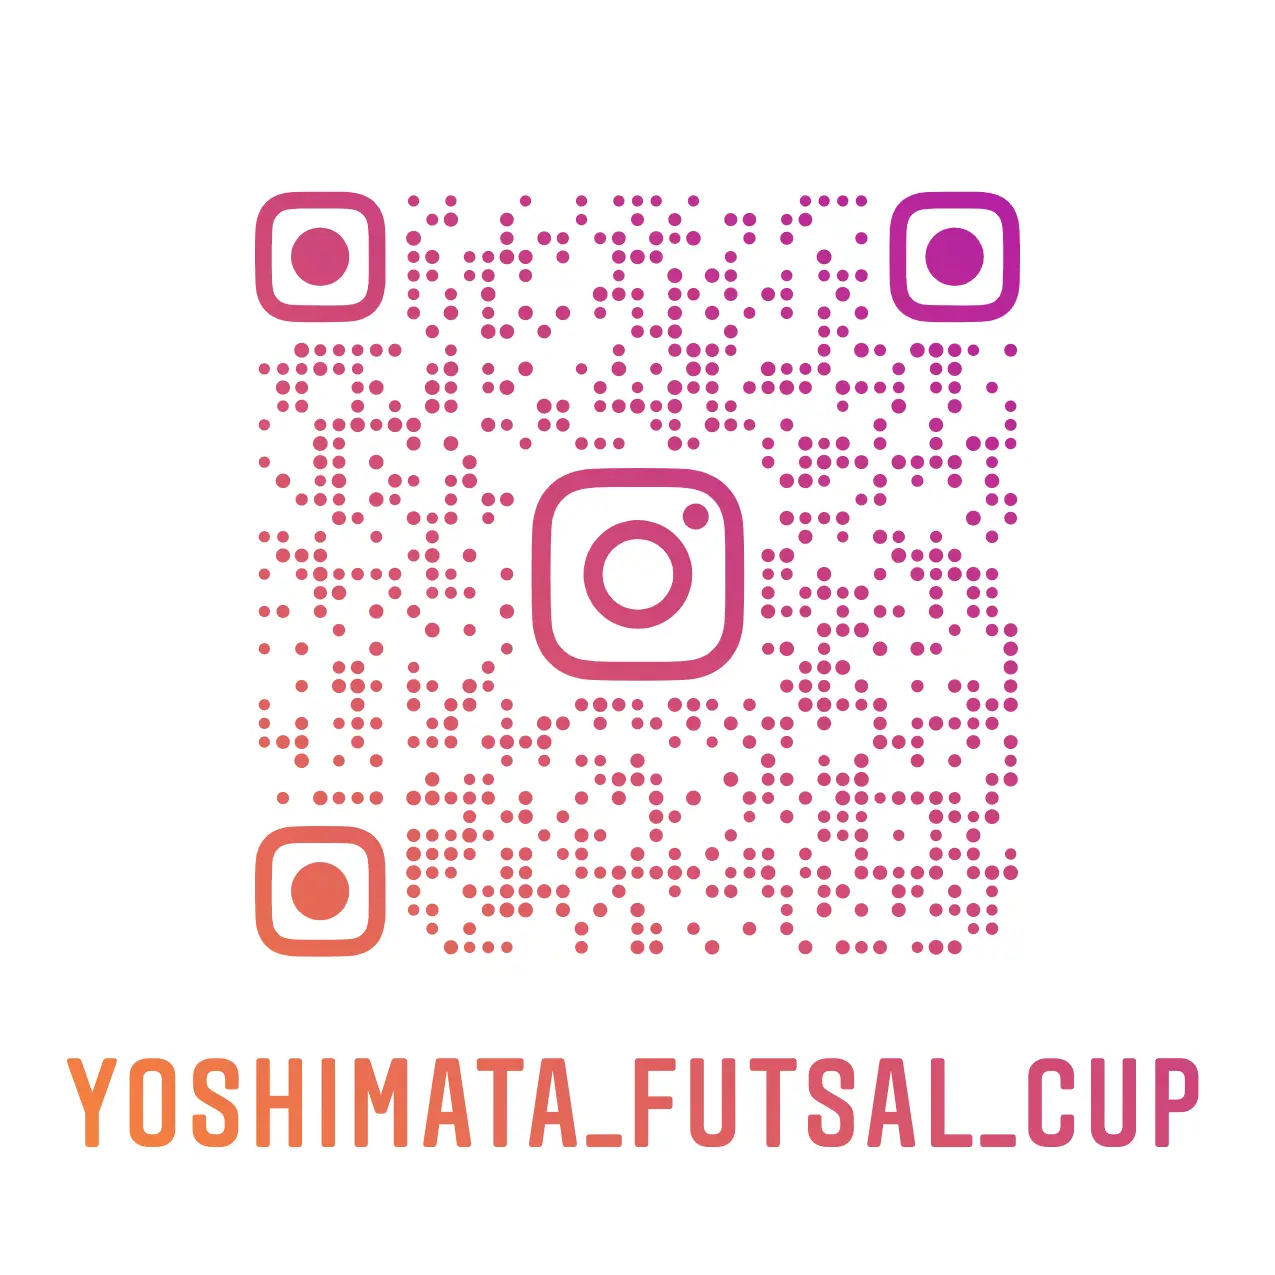 Follow @yoshimata_futsal_cup on Instagram